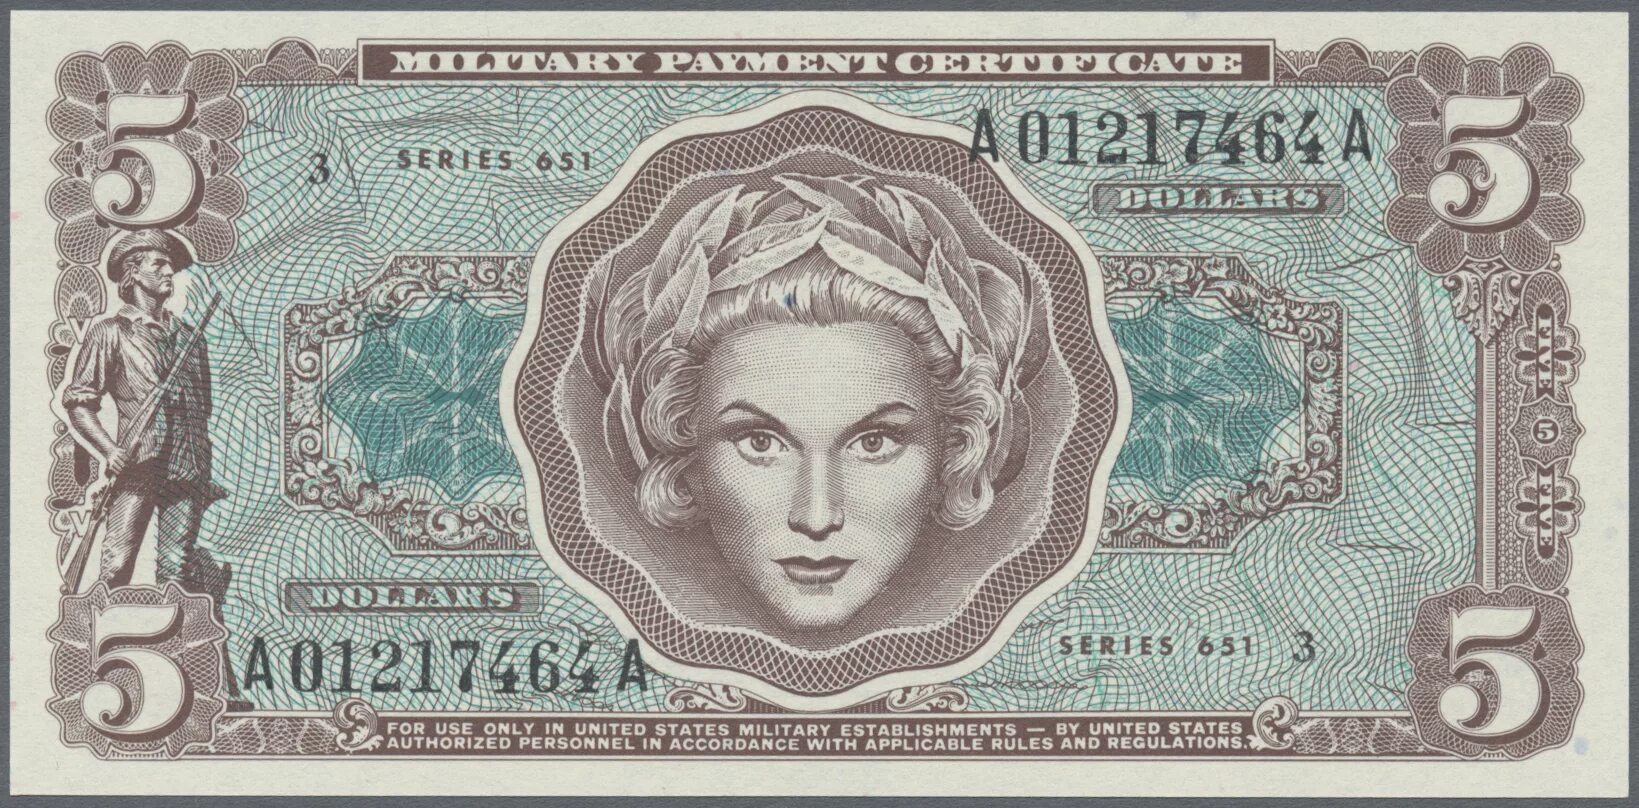 4 5 dollars. Бумажные деньги всех стран. 1 Dollar United States of America 1969. 651 Доллар. Five Dollars 2002 Series.